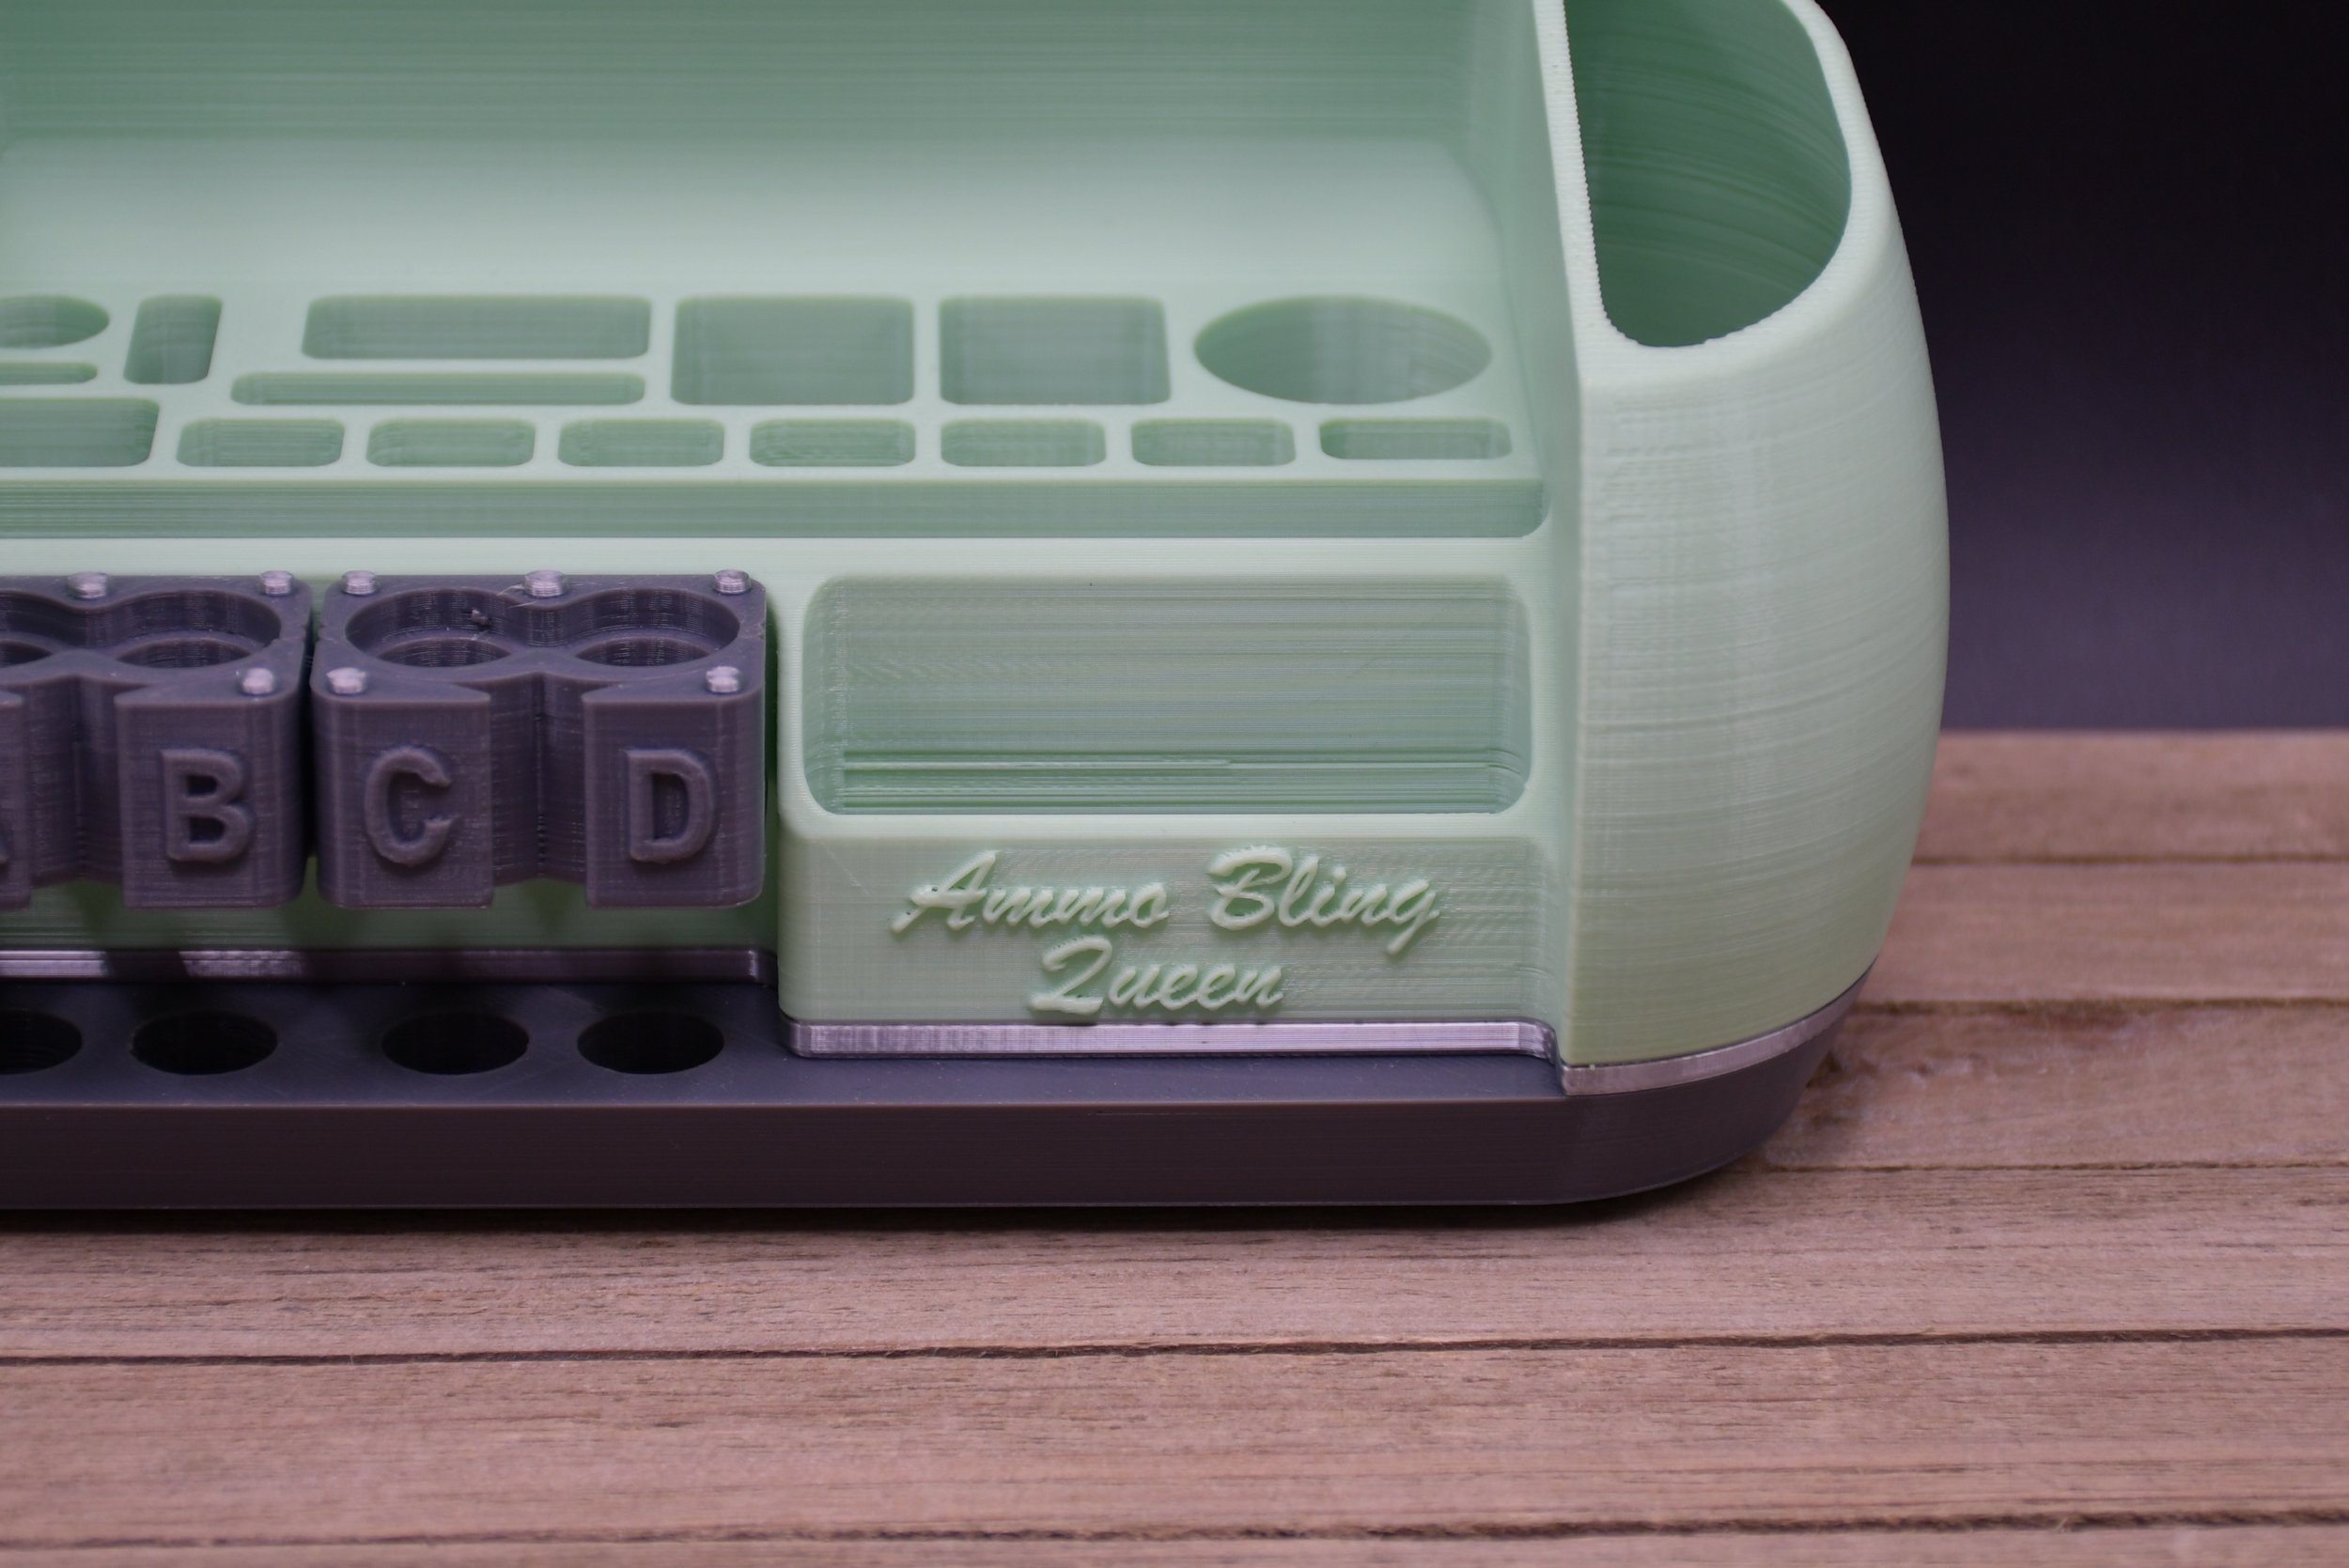 Mini Fry Tool Caddy – World's Cutest Mini Cricut® Explore Tool